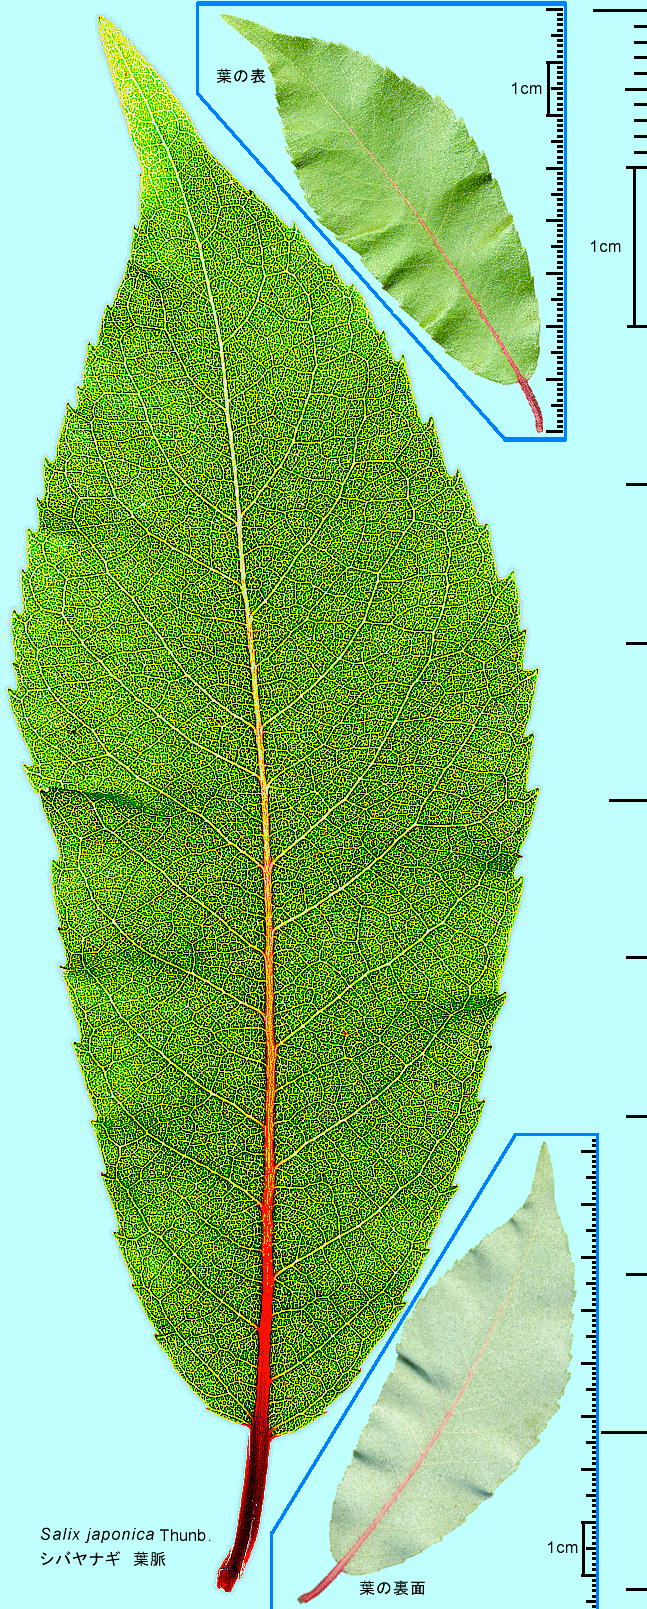 Salix japonica Thunb. VoiM t